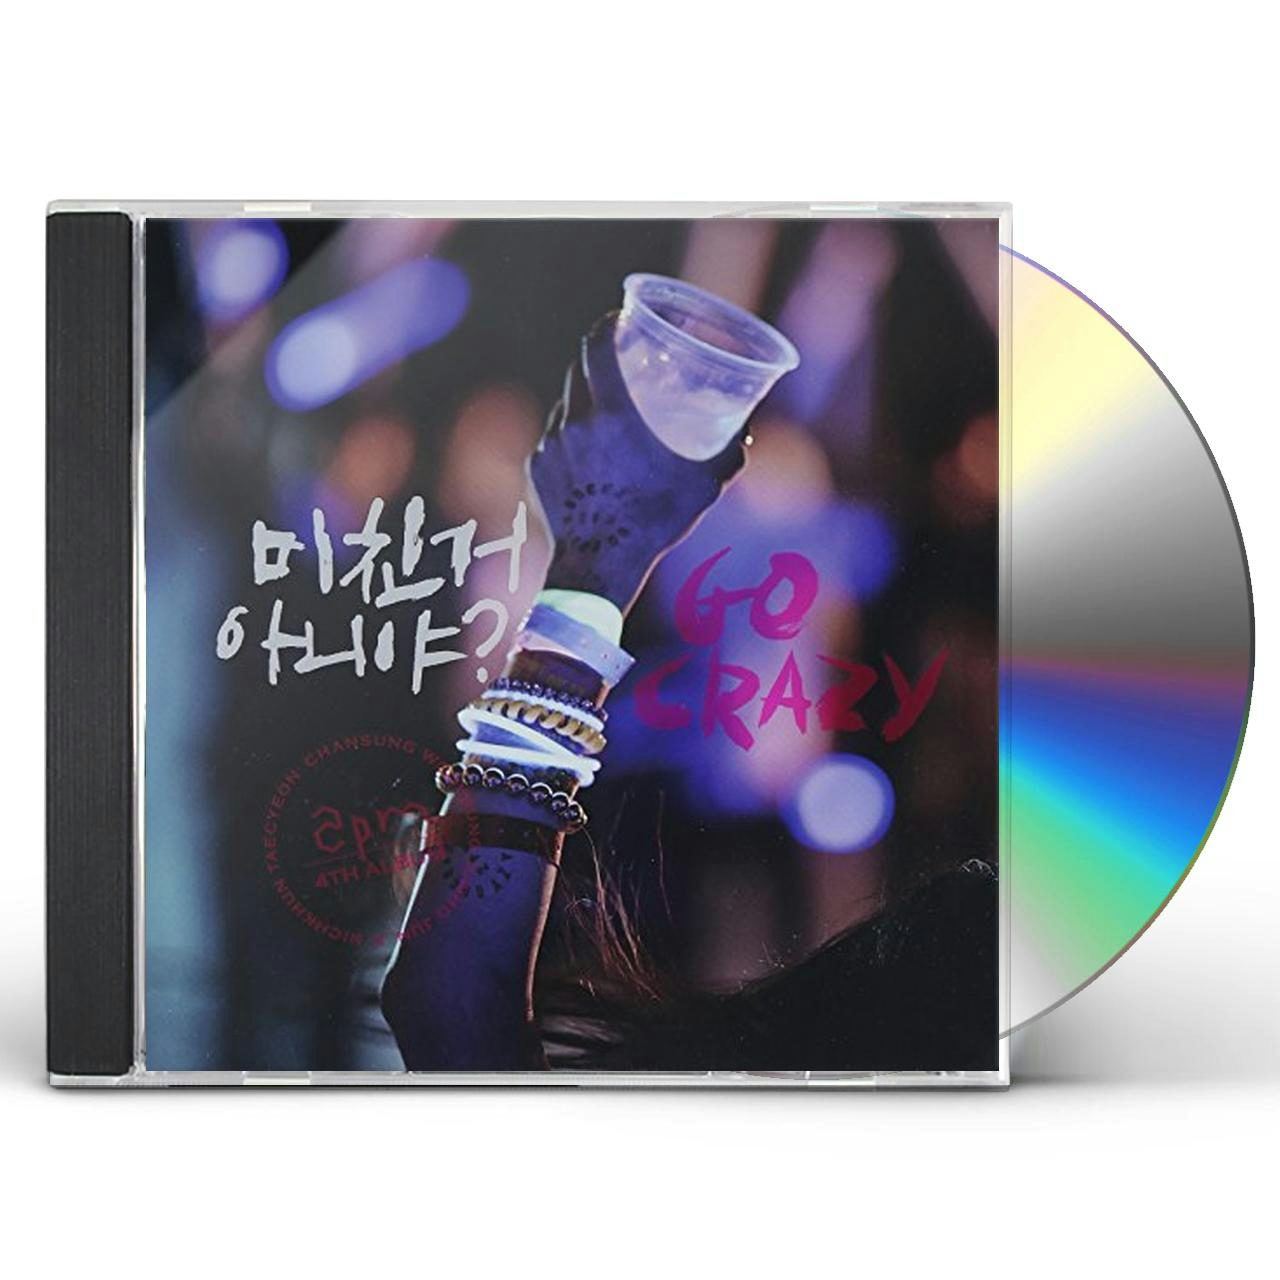 2PM BEST 2008 - 2011 IN KOREA CD